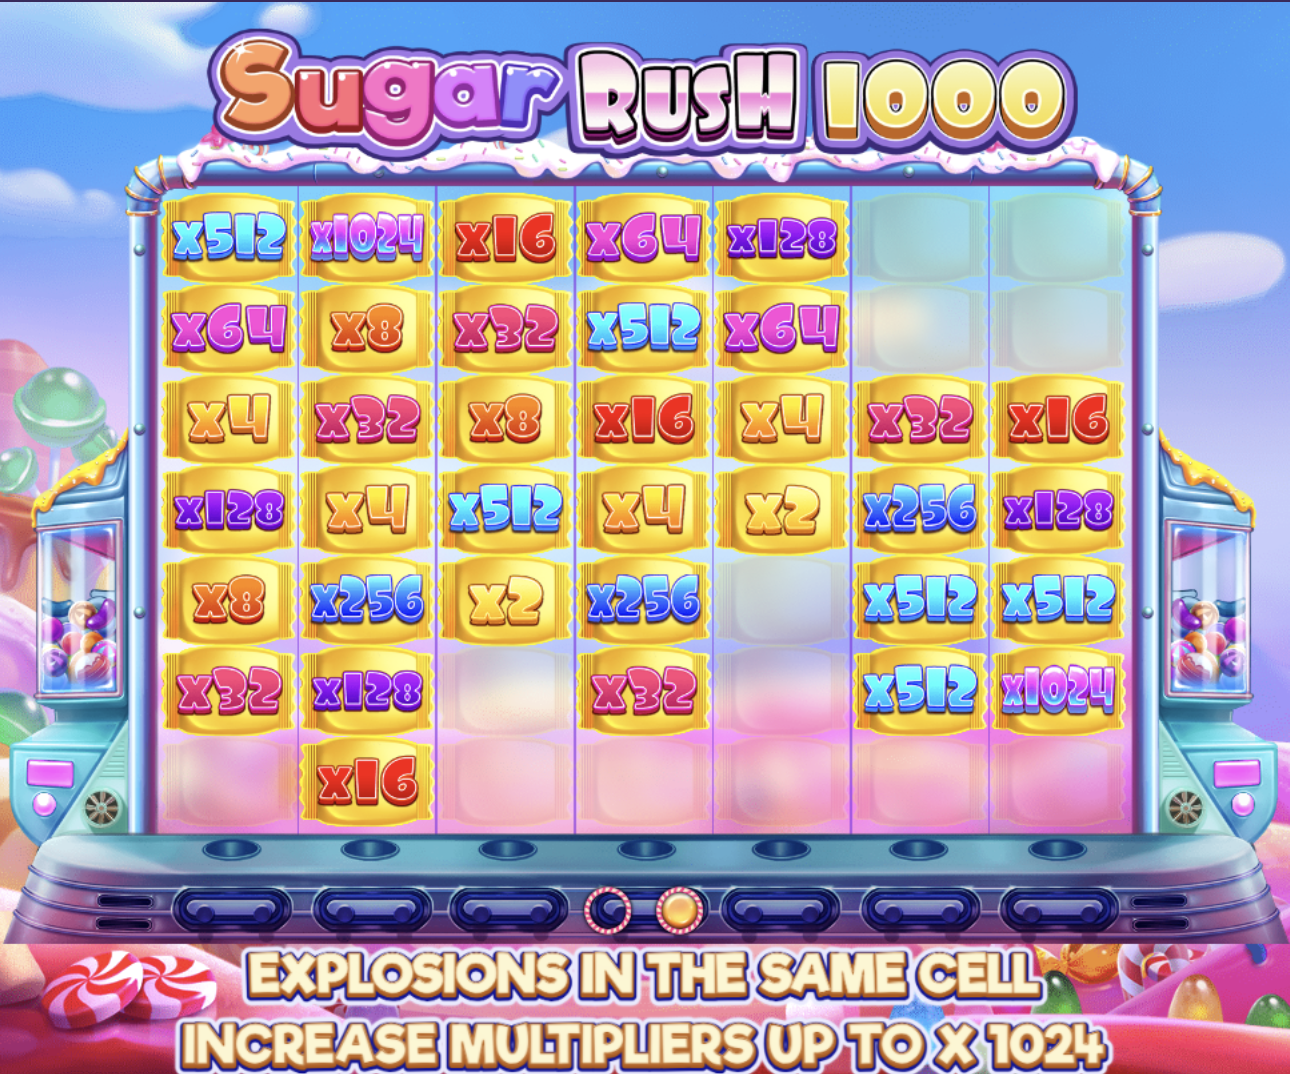 THE SWEET WORLD OF SUGAR RUSH 1000 SLOT GAME